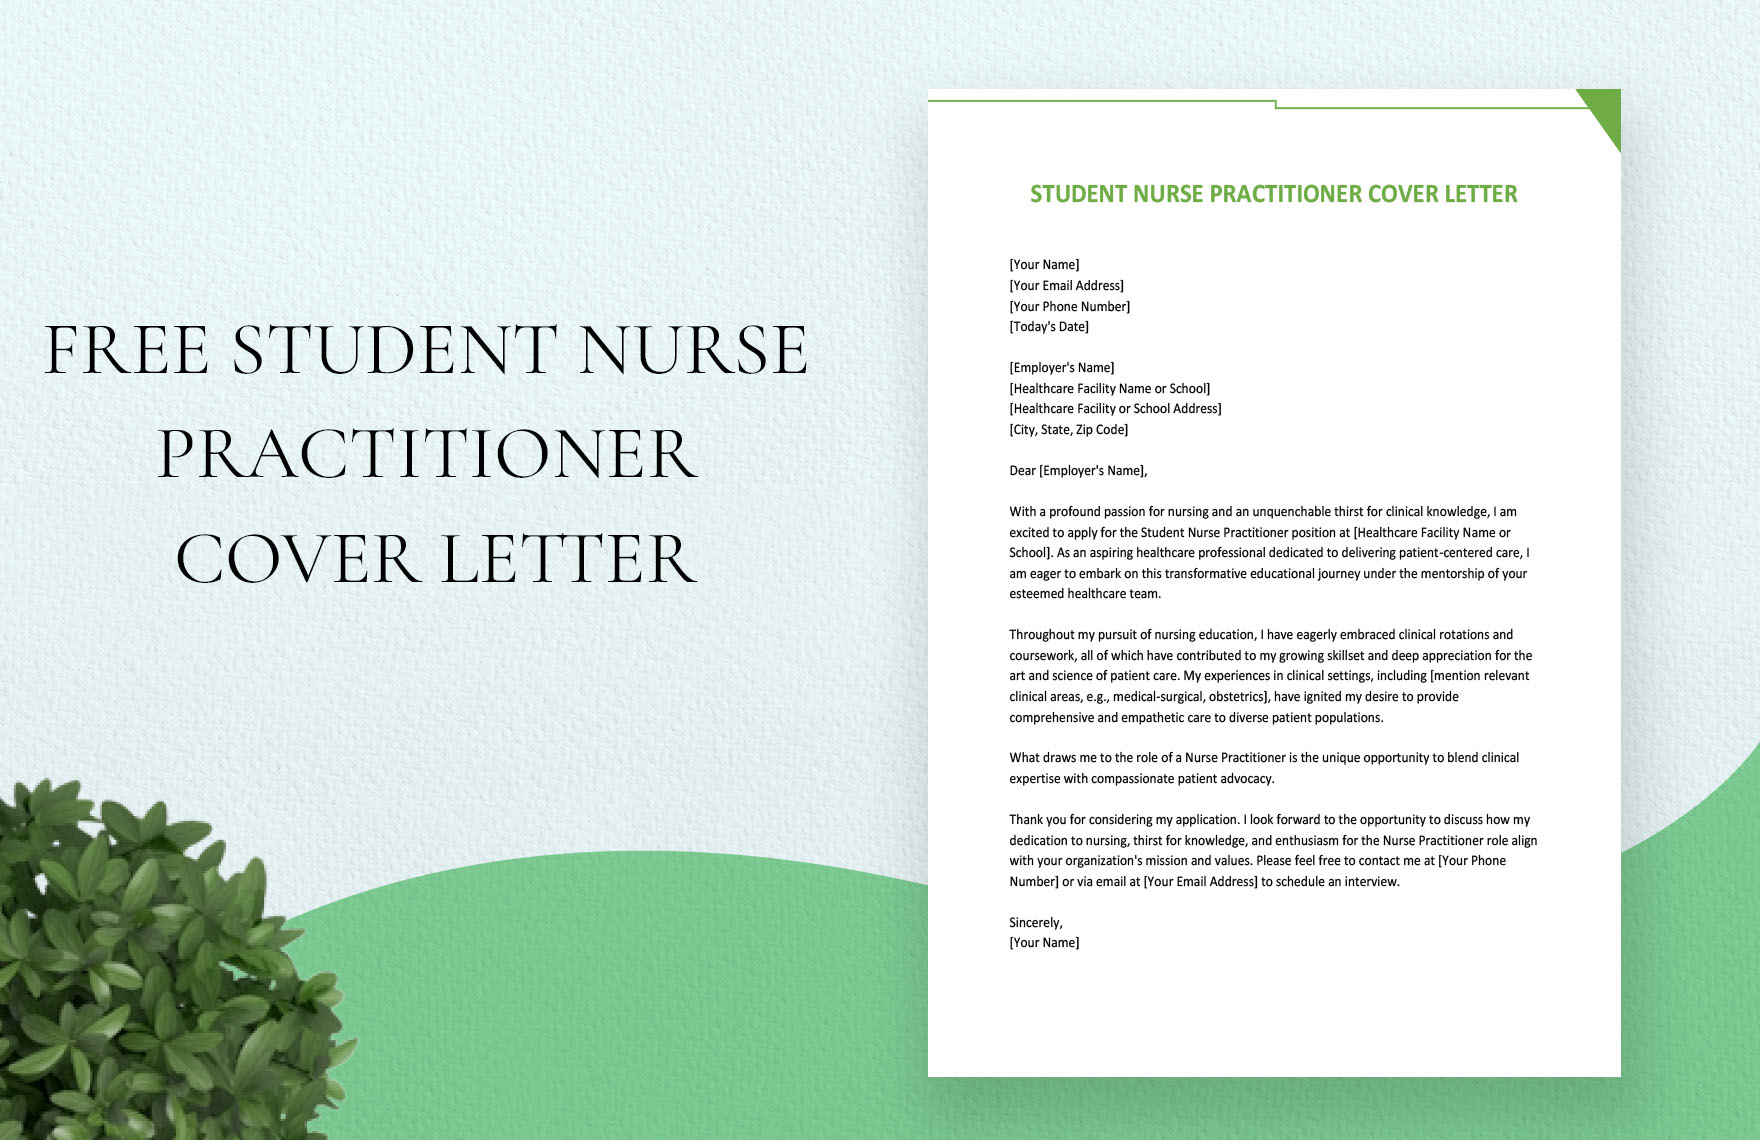 Student Nurse Practitioner Cover Letter in Word, Google Docs